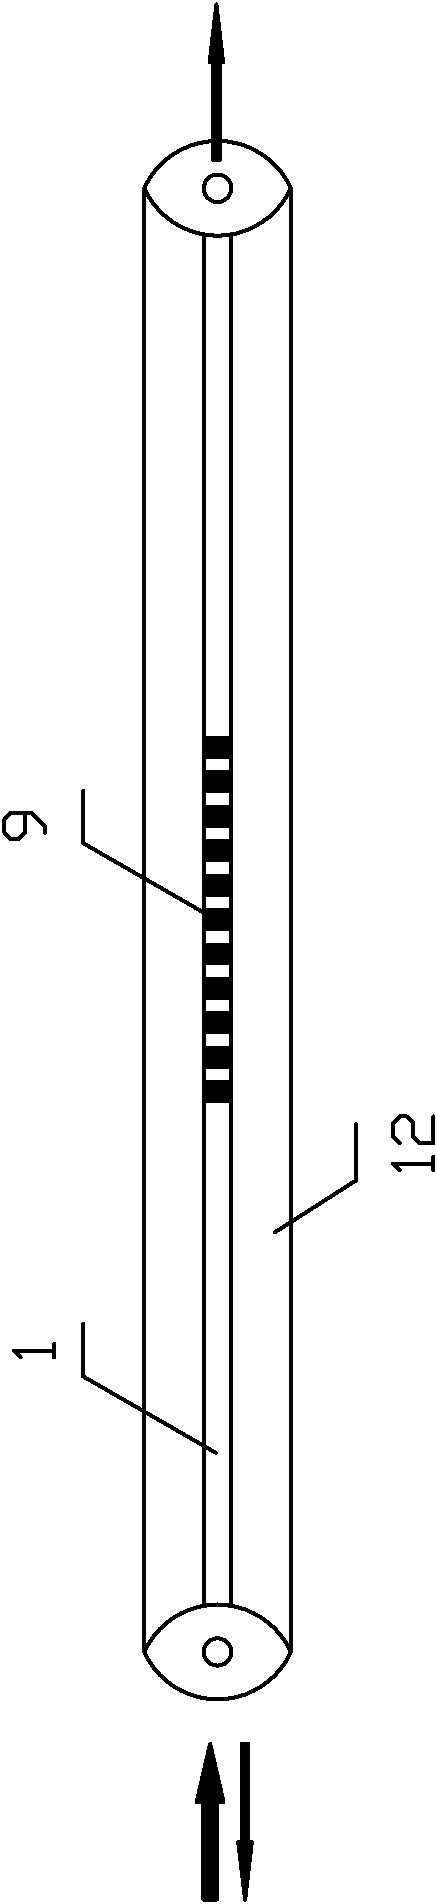 Pendulum bob-constant section beam fiber bragg grating dip angle sensor and calibration method